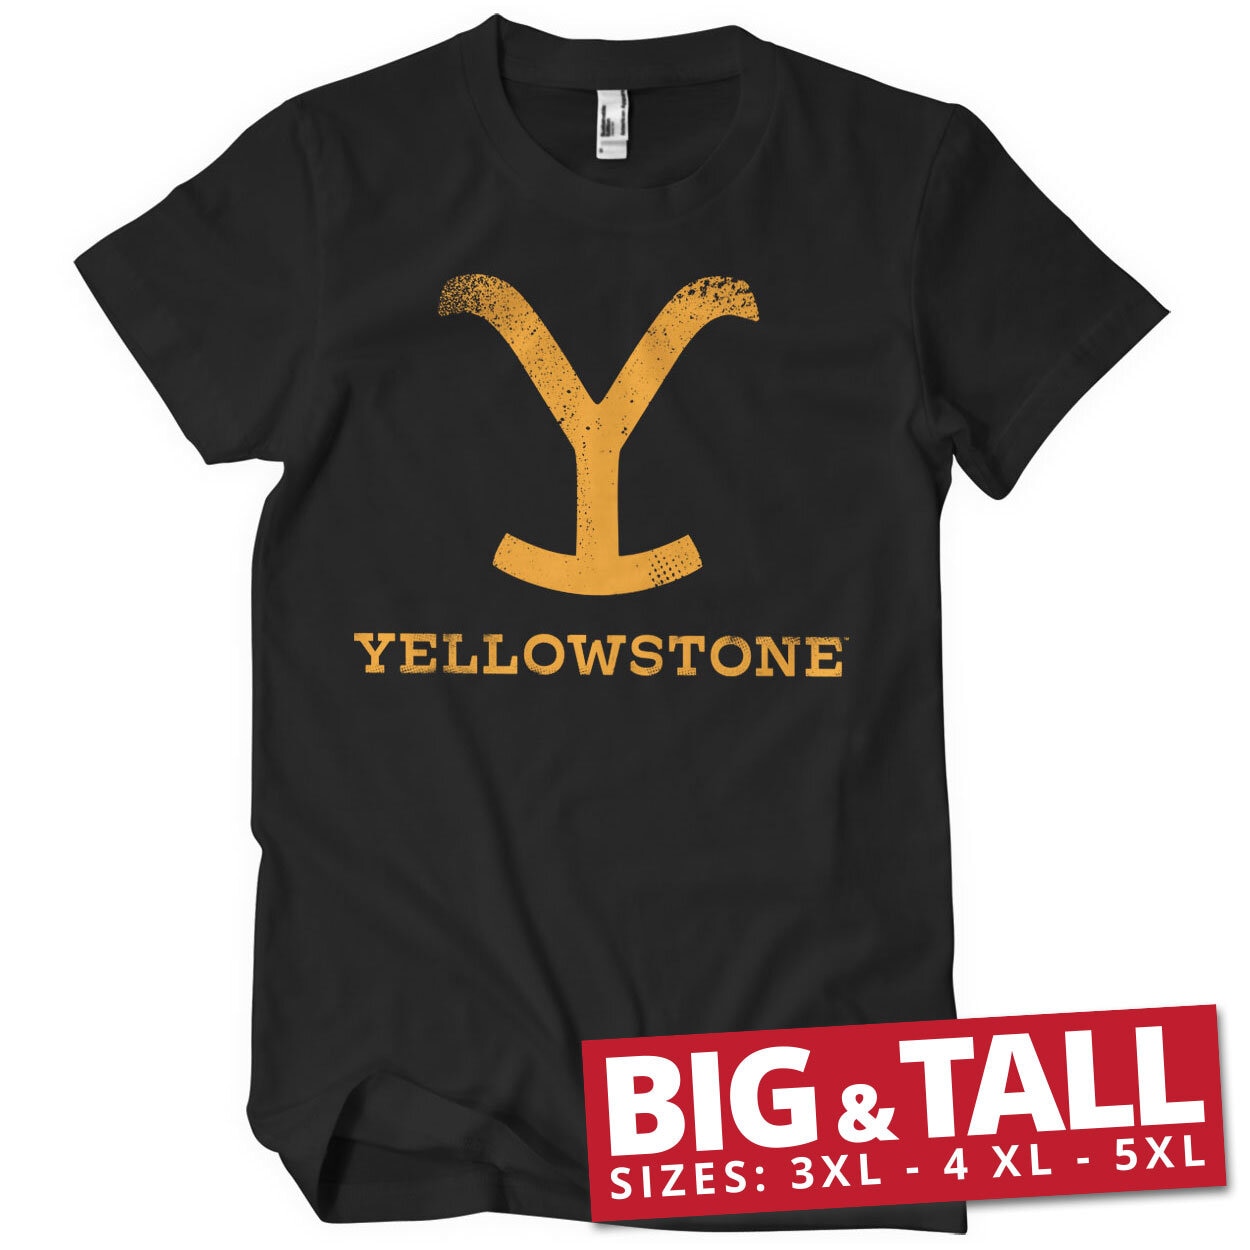 Yellowstone Big & Tall T-Shirt